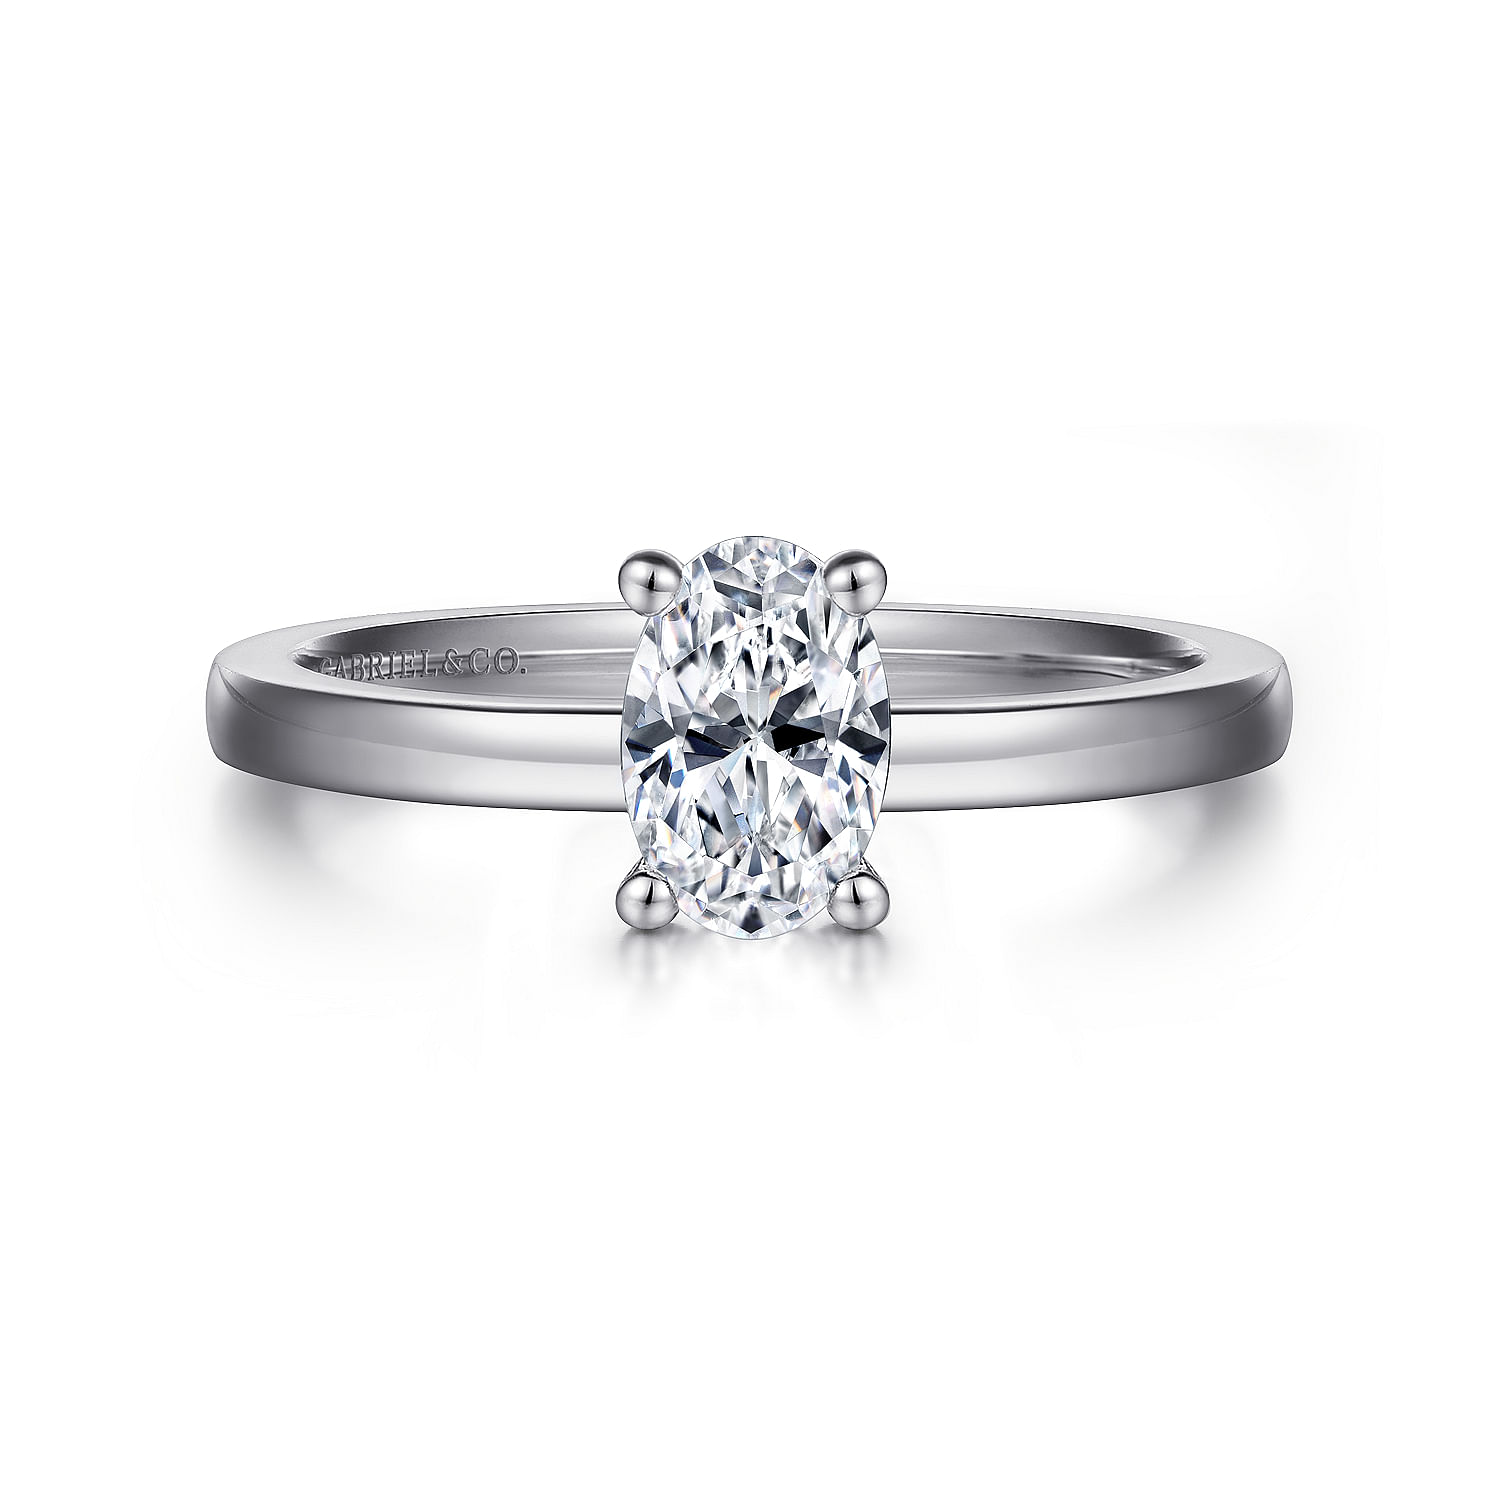 Paula - 14K White Gold Oval Diamond Engagement Ring